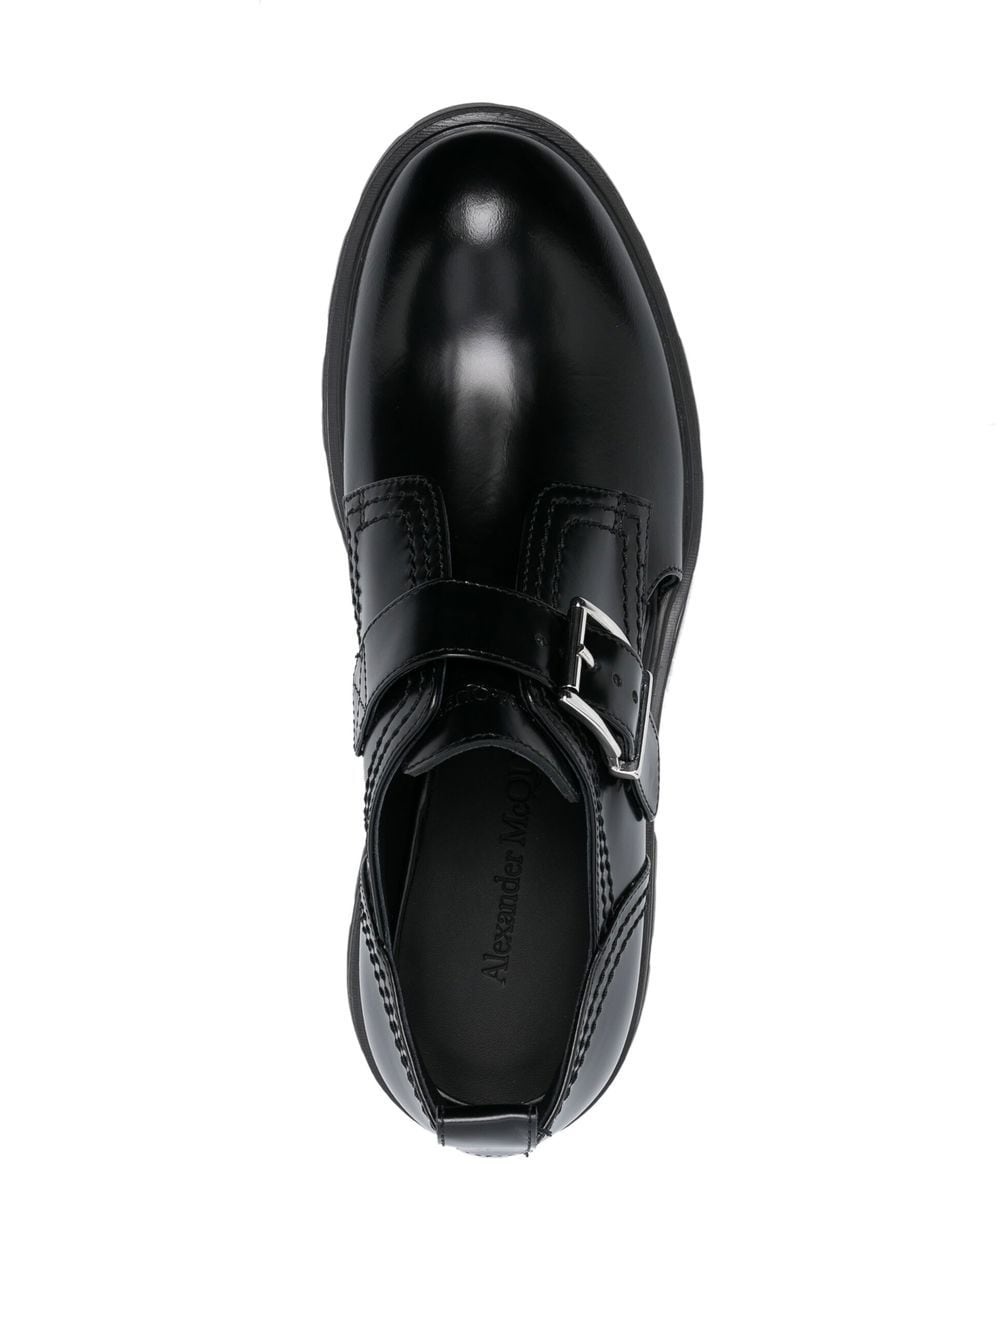 Alexander McQueen side-buckle fastening brogue shoes | REVERSIBLE